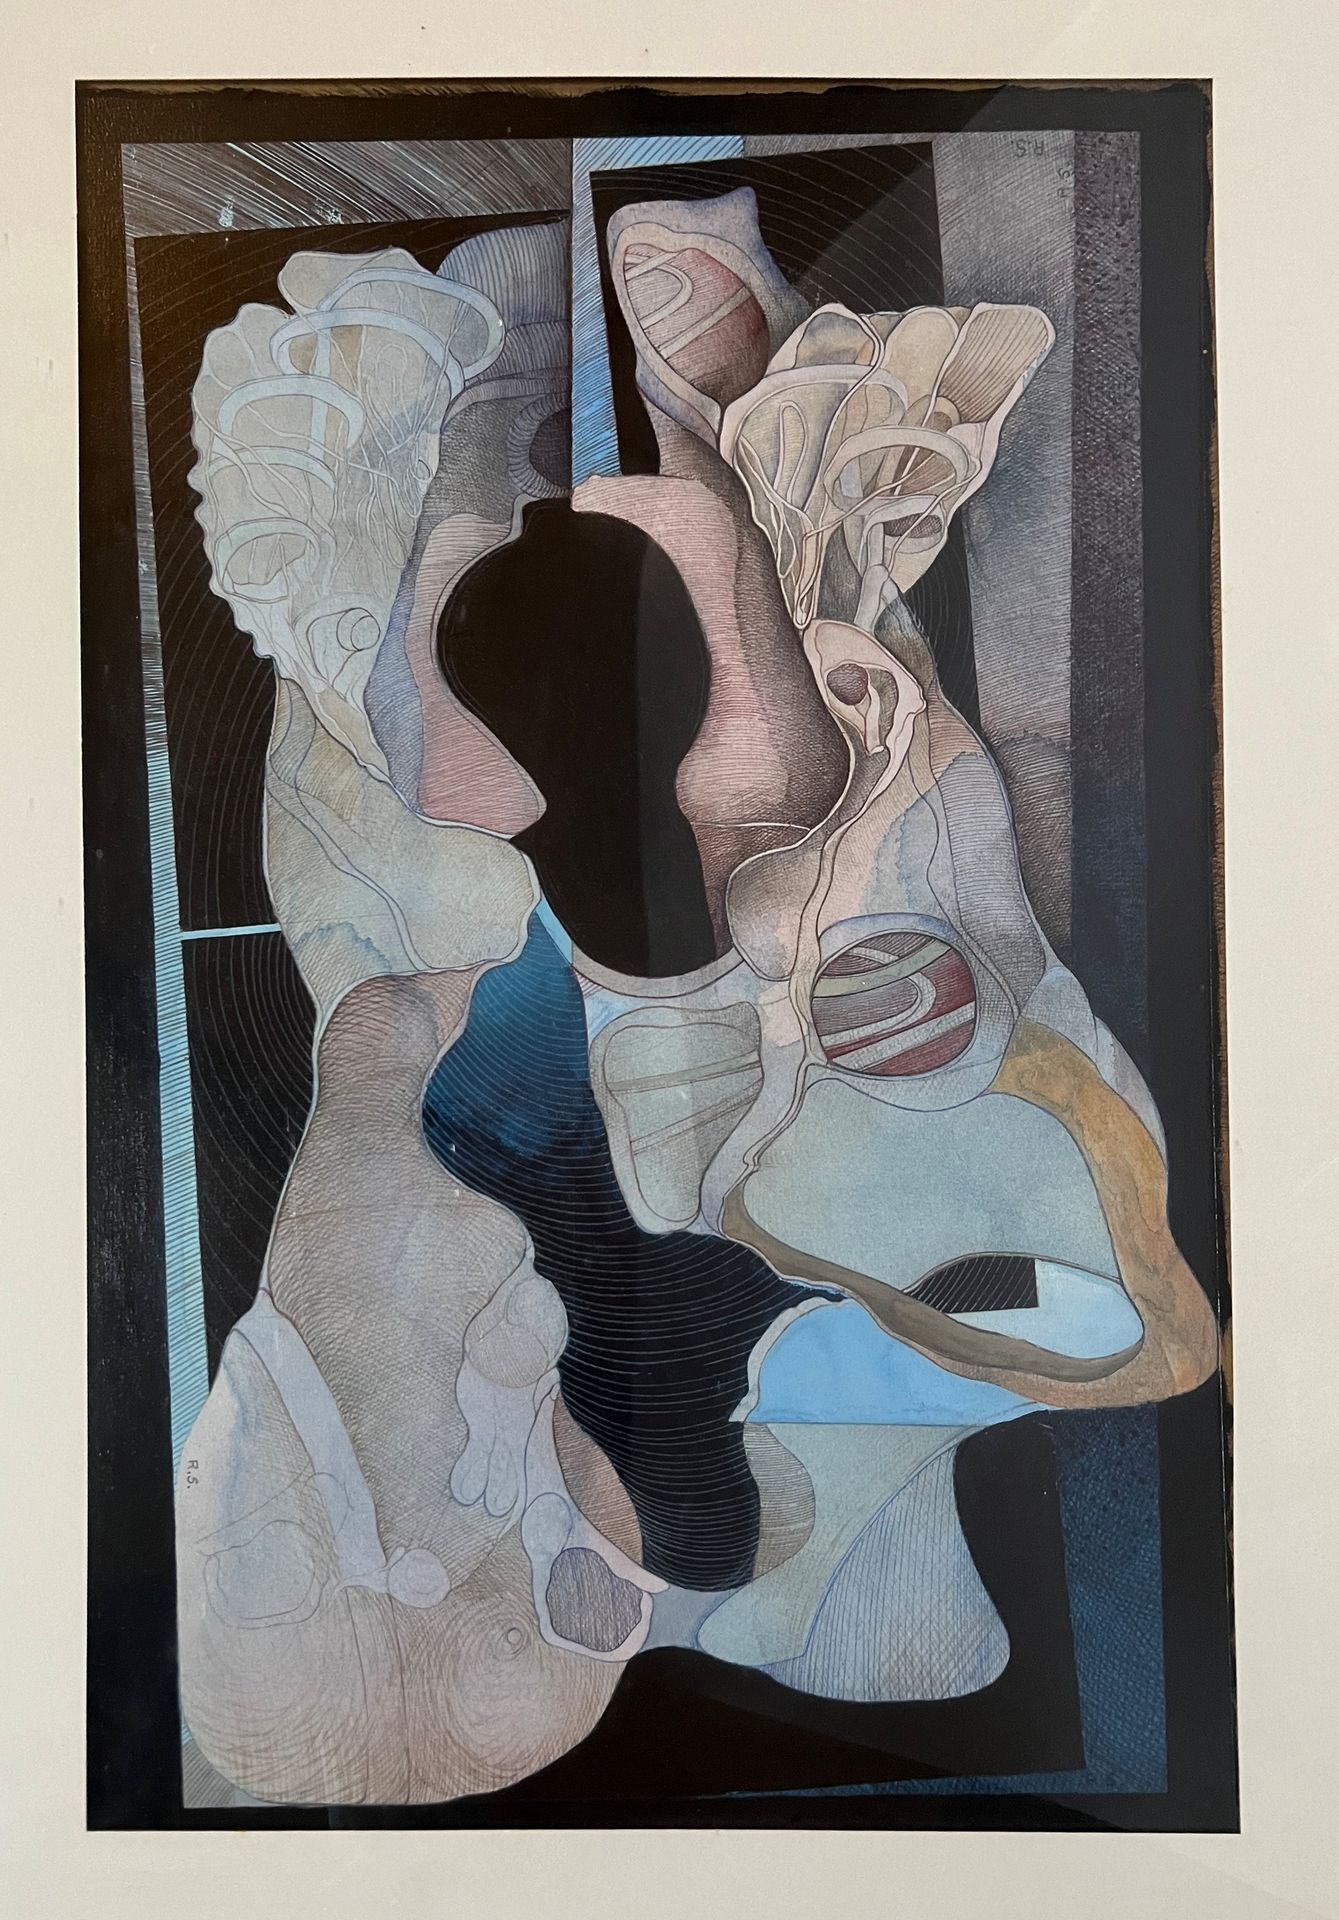 Null 罗兰-塞内卡（1942年），"构图"，带图案的墨水，高：45厘米，宽：29厘米

在艺术家Christian Oddoux的家中展出的拍品